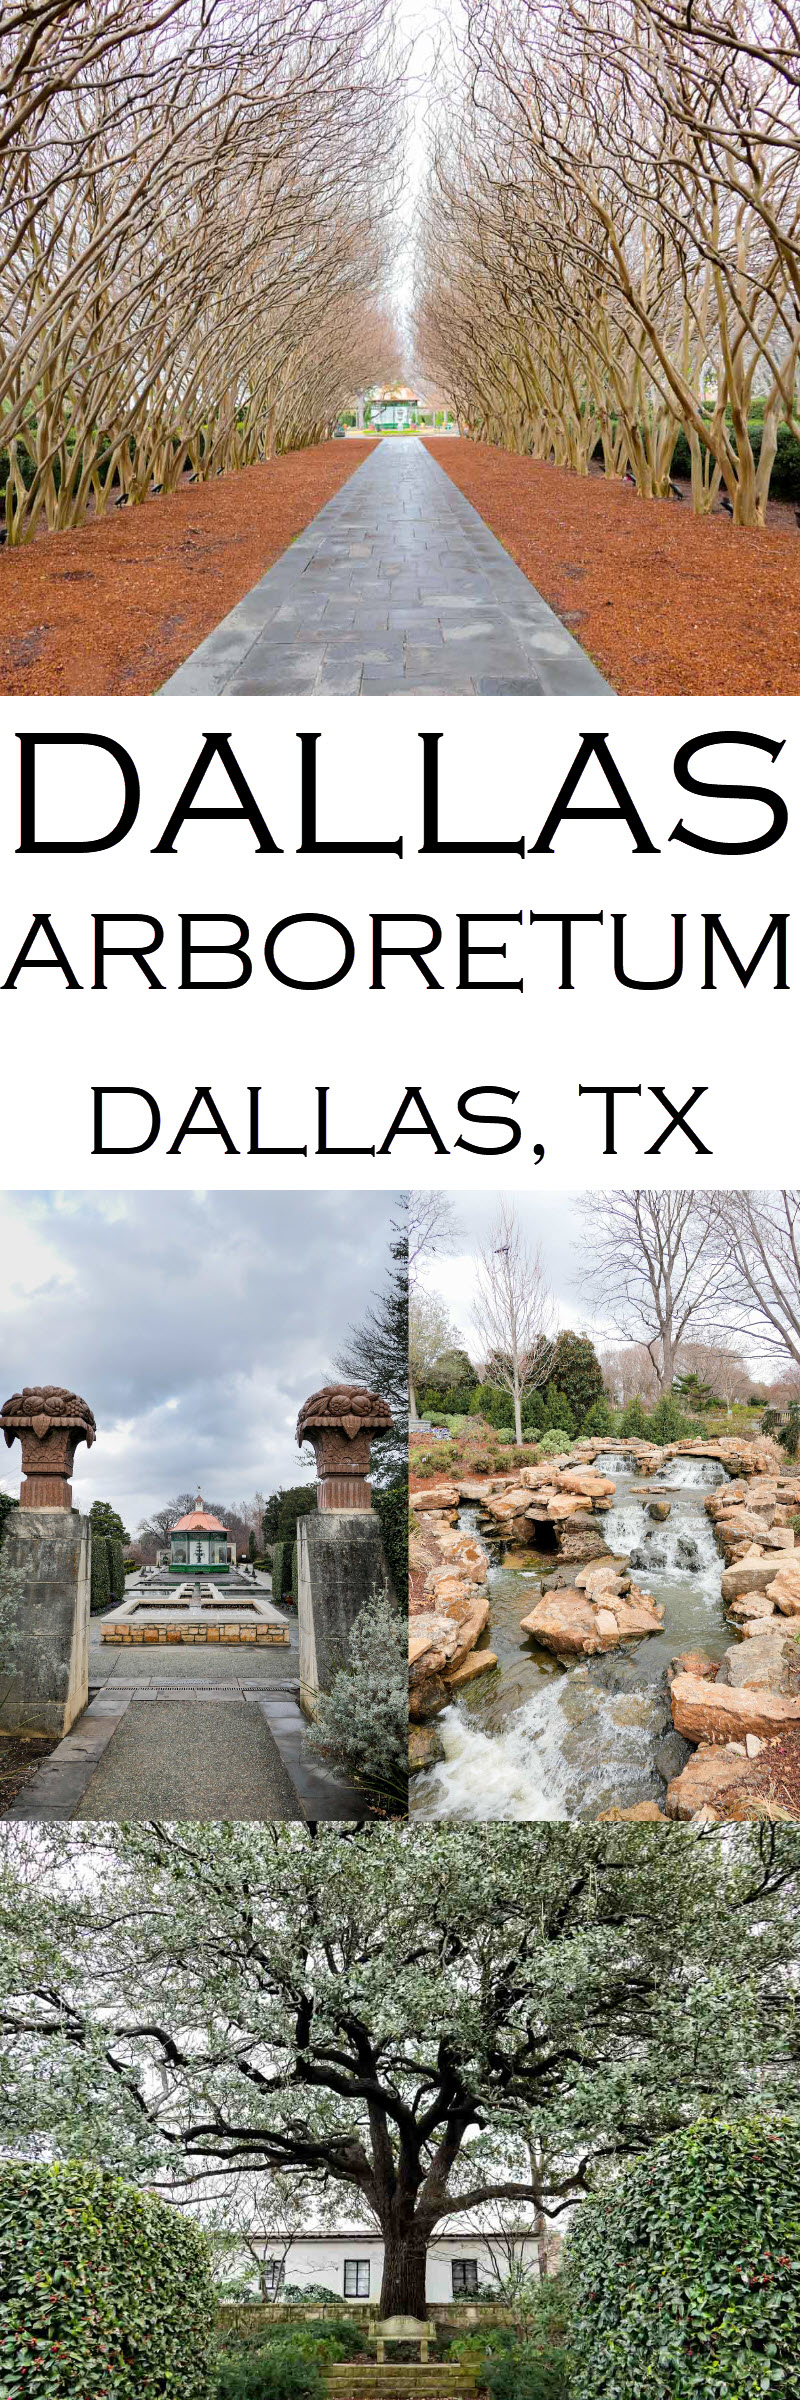 Dallas Arboretum + Botanical Gardens Photos + Review #lpworldtravels #texas #dallas #arboretums #botanicalgarden #travel #travelblog #travelblogger #travelwriter #travelguide